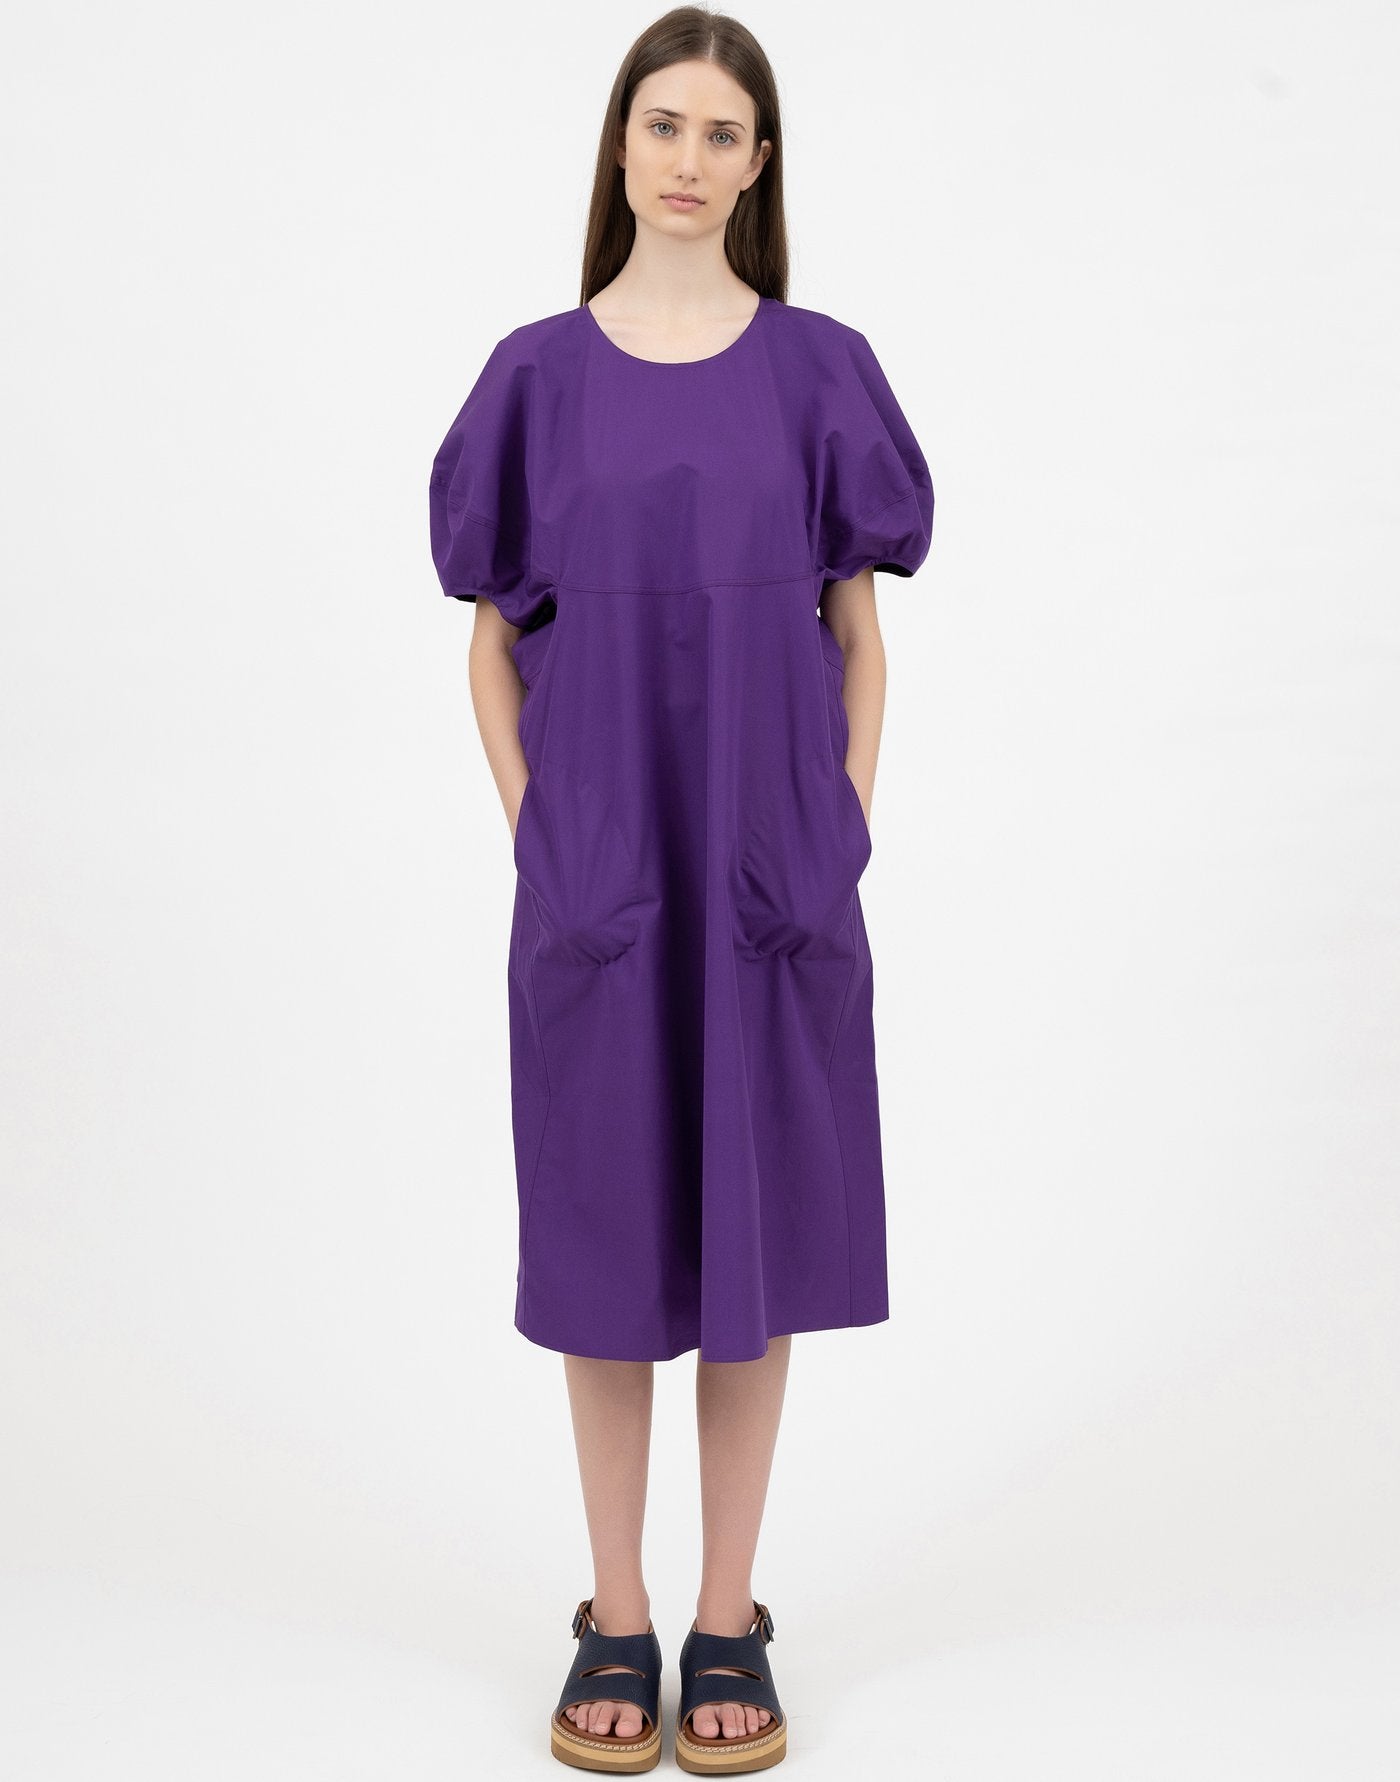 Sofie D'Hoore Dot Dress in Violet